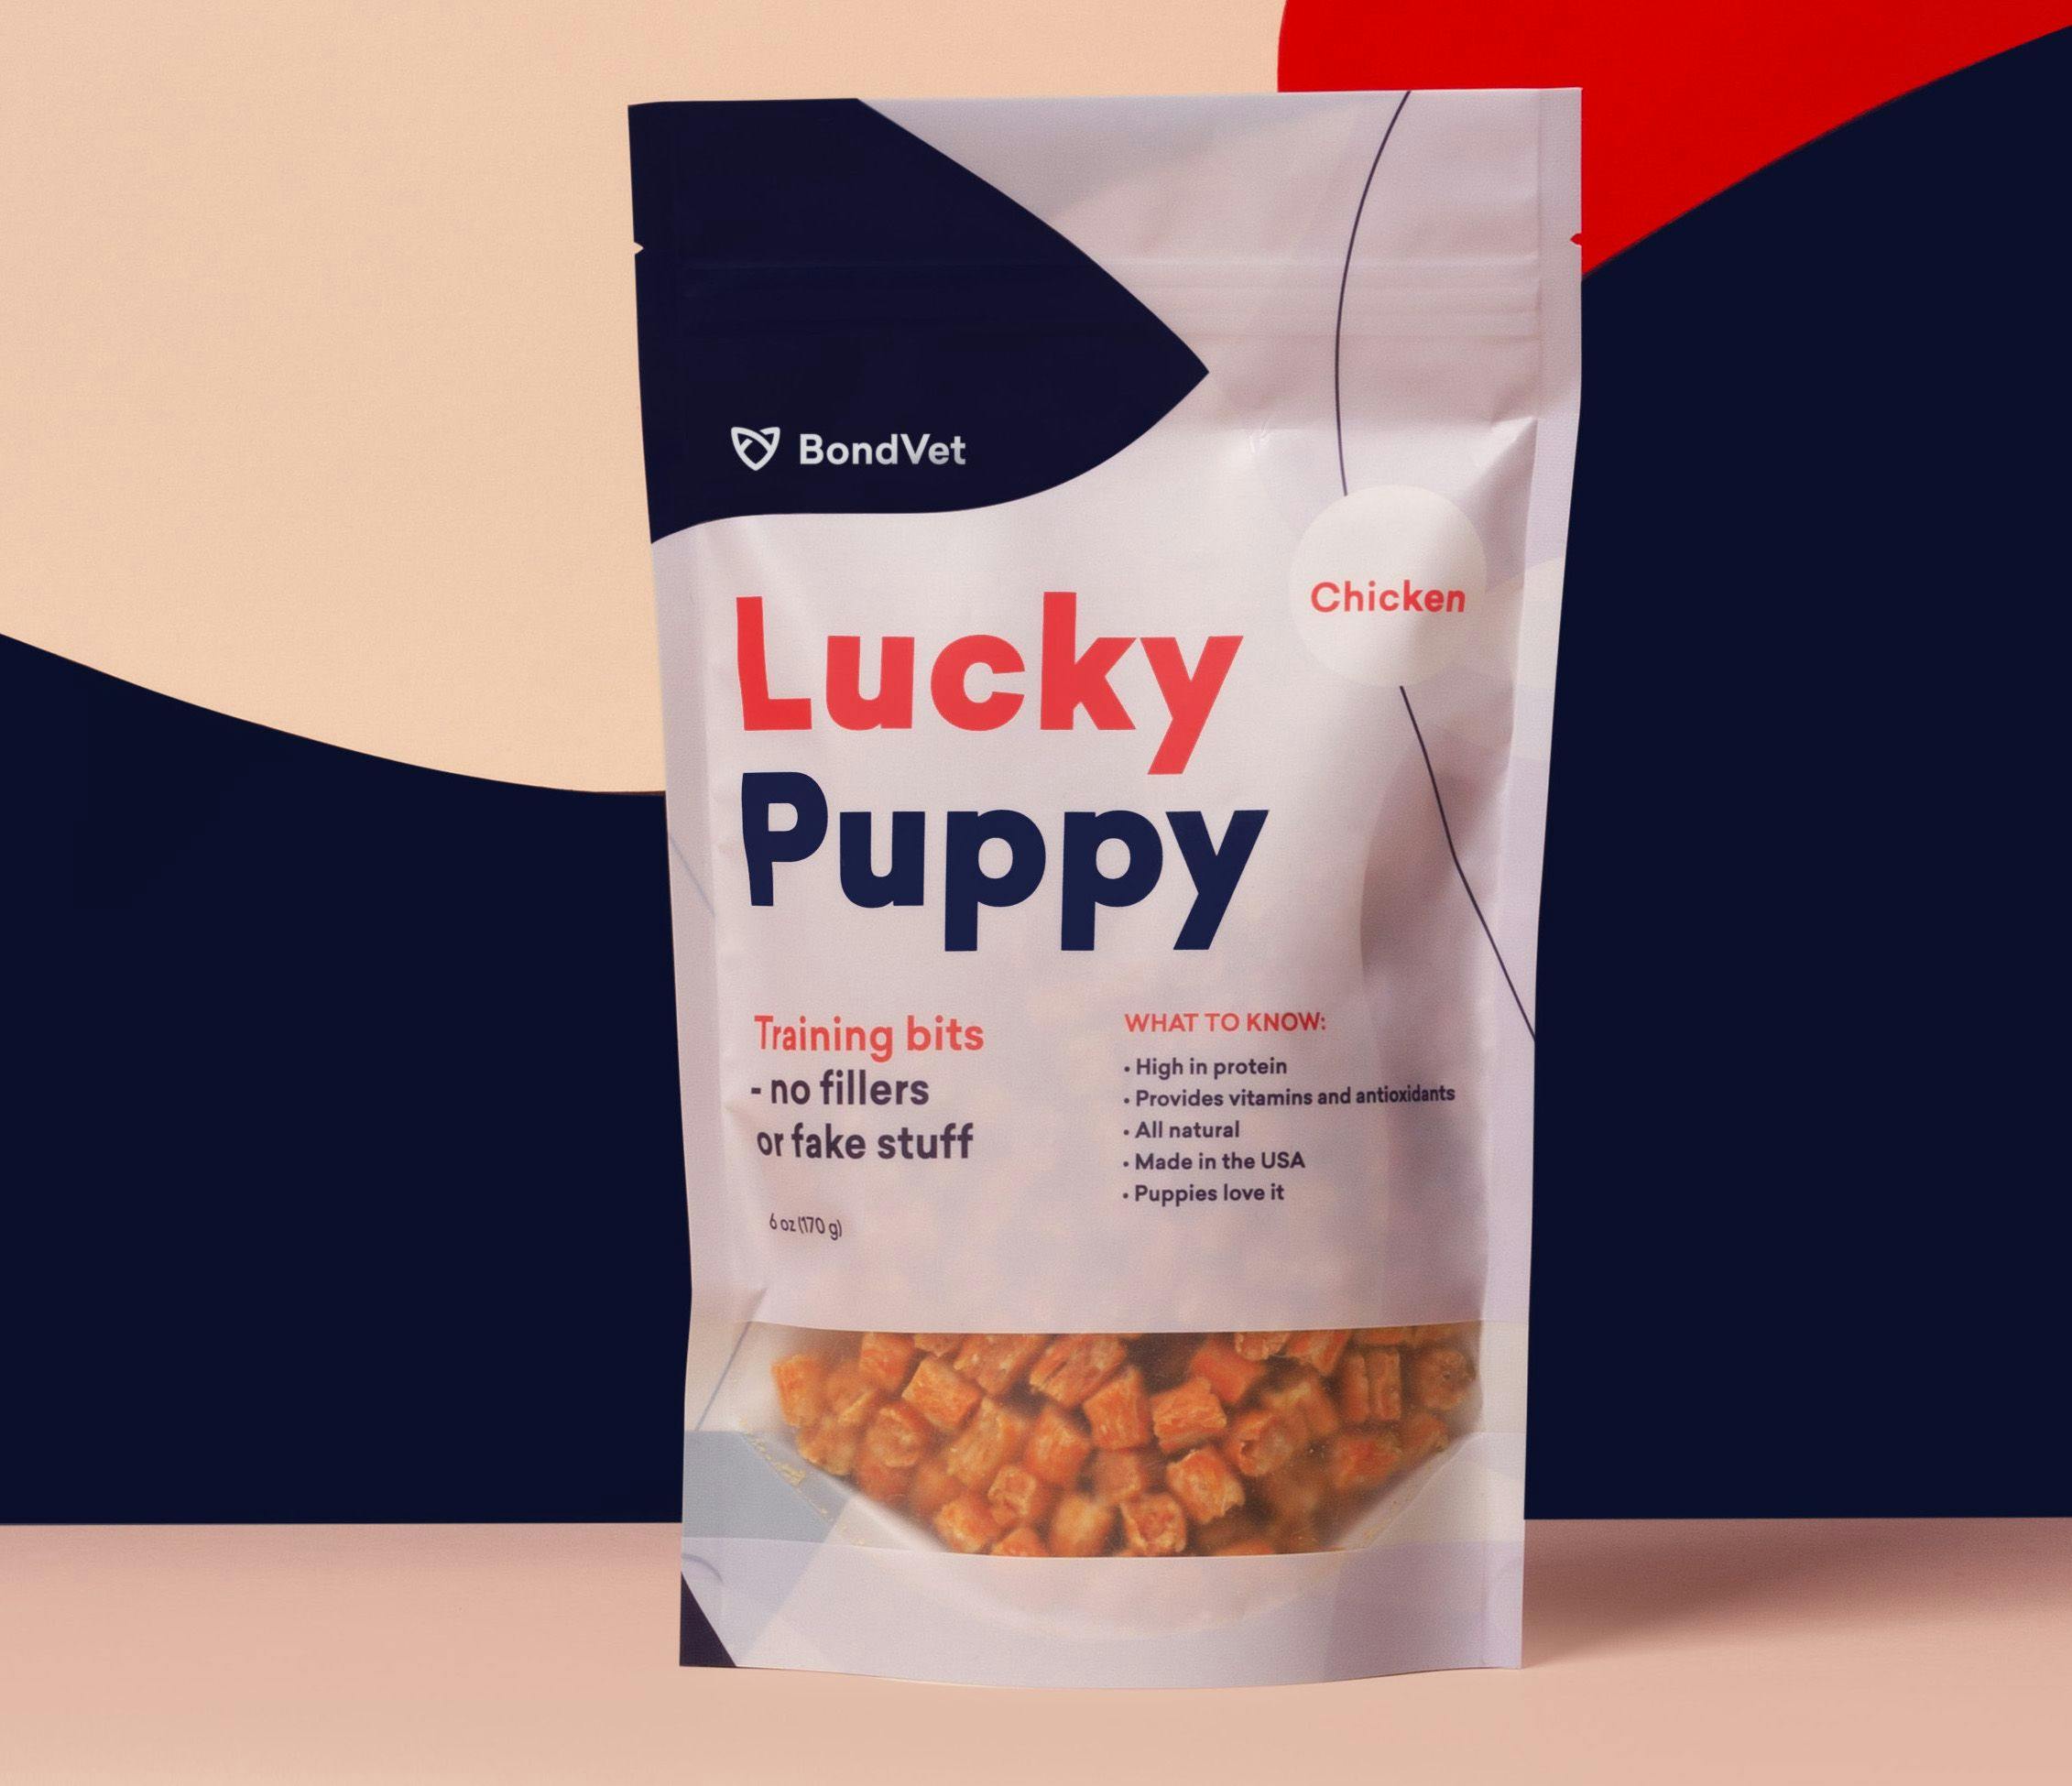 Bond Vet teams up with Polkadog Bakery to unveil puppy treats